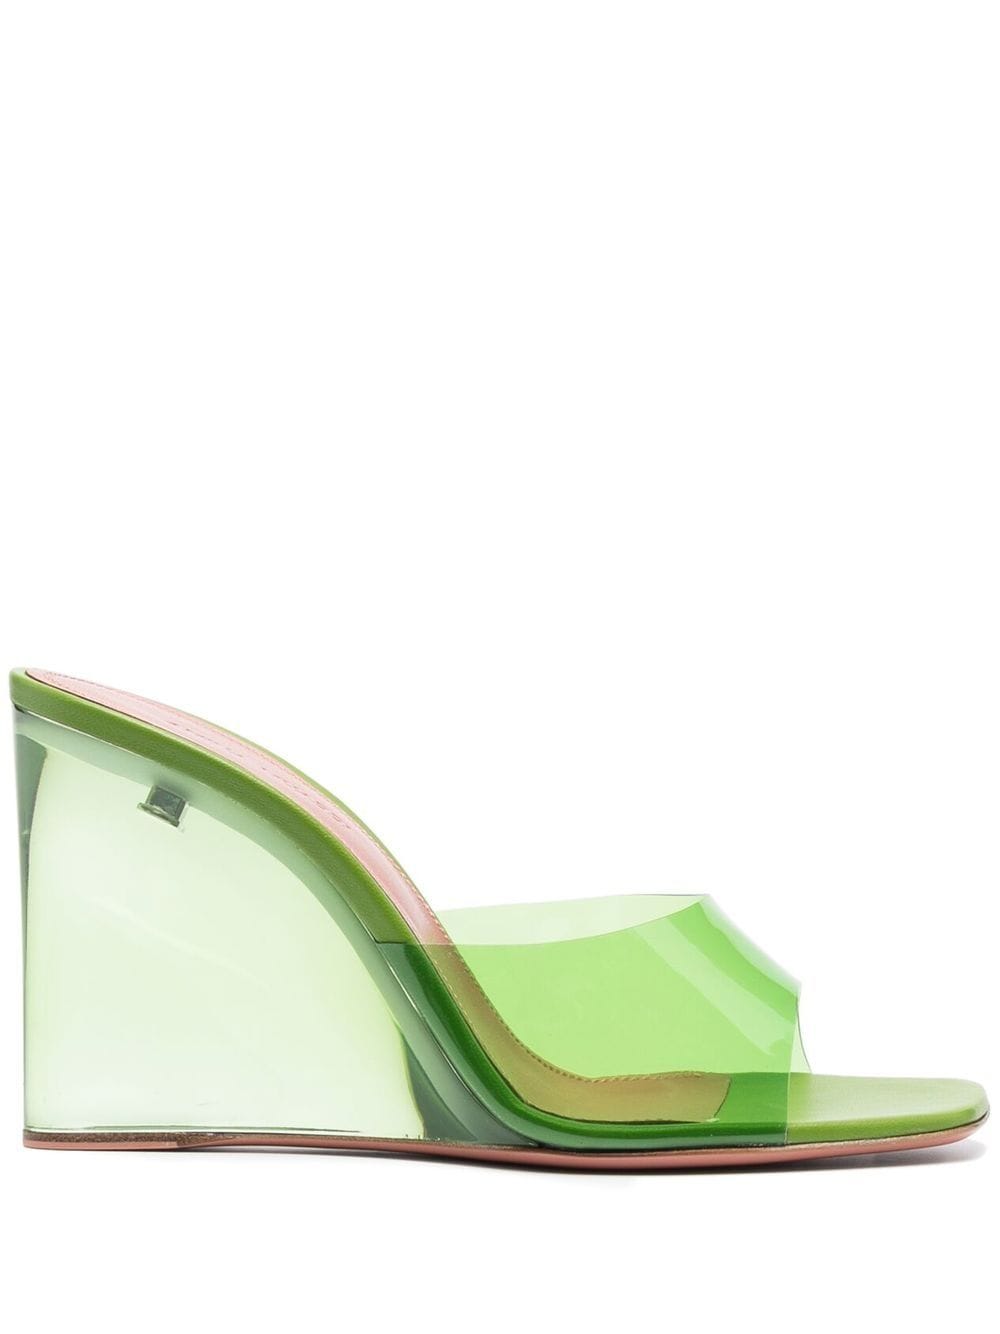 Amina Muaddi 95mm Lupita glass wedge heels - Green von Amina Muaddi